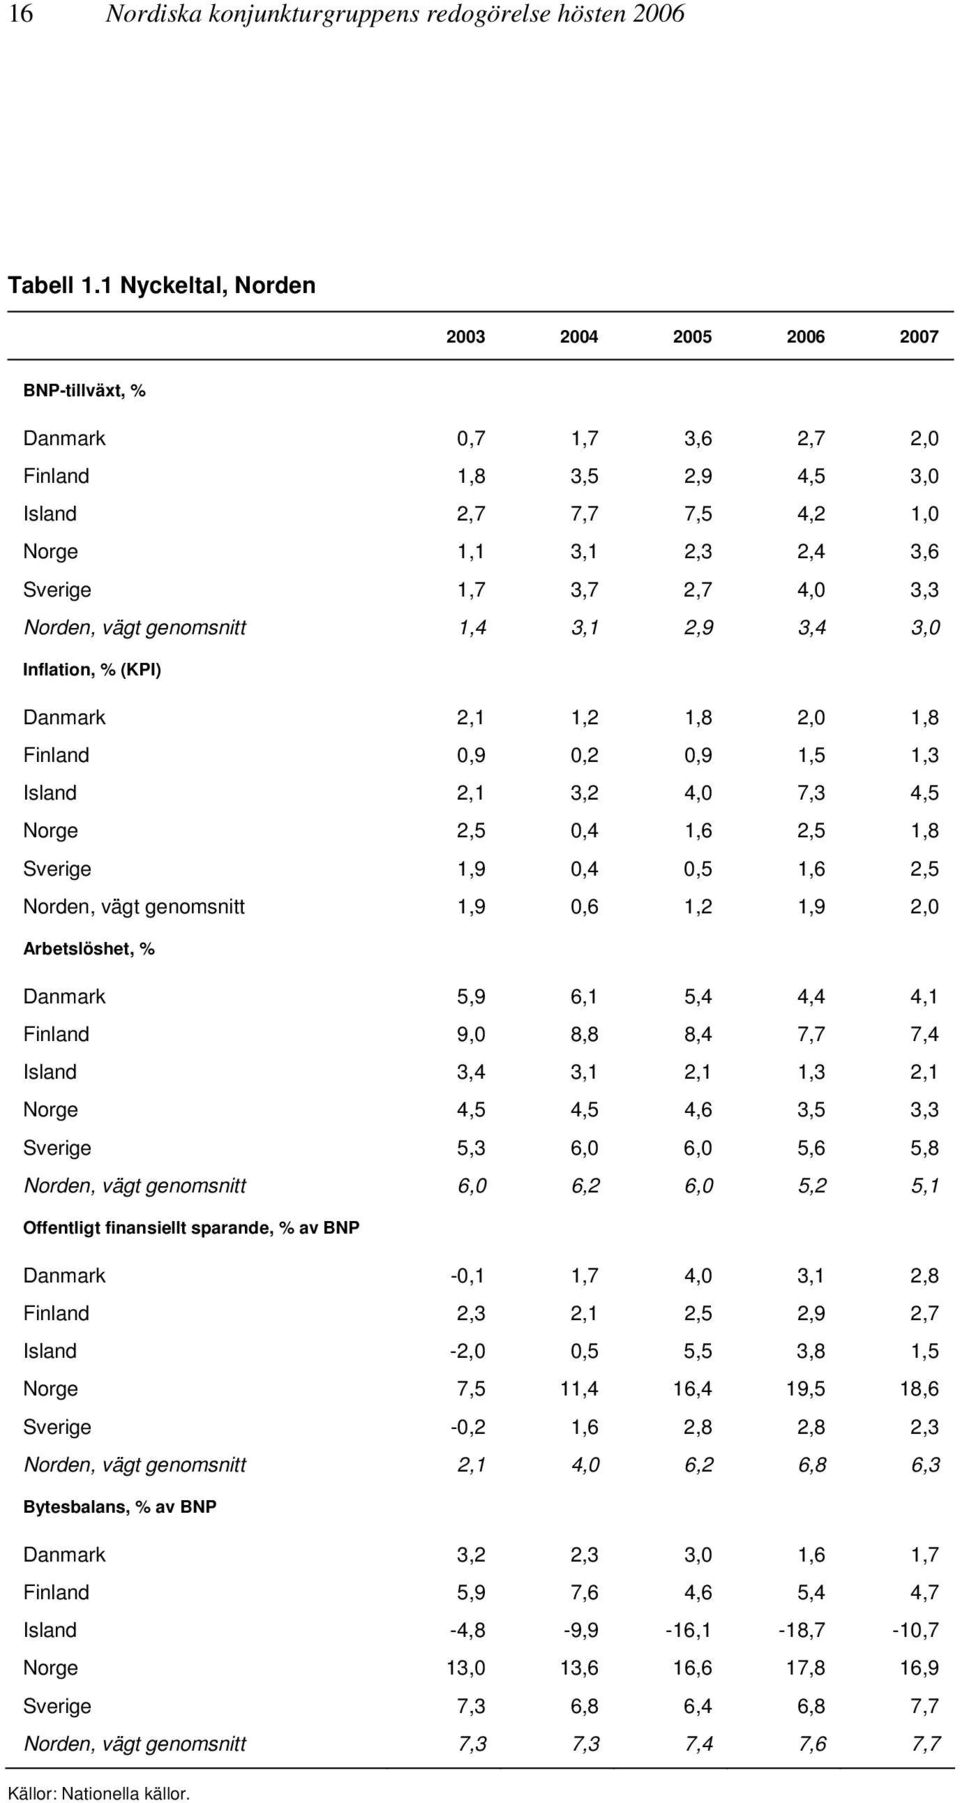 Norden, vägt genomsnitt 1,4 3,1 2,9 3,4 3,0 Inflation, % (KPI) Danmark 2,1 1,2 1,8 2,0 1,8 Finland 0,9 0,2 0,9 1,5 1,3 Island 2,1 3,2 4,0 7,3 4,5 Norge 2,5 0,4 1,6 2,5 1,8 Sverige 1,9 0,4 0,5 1,6 2,5